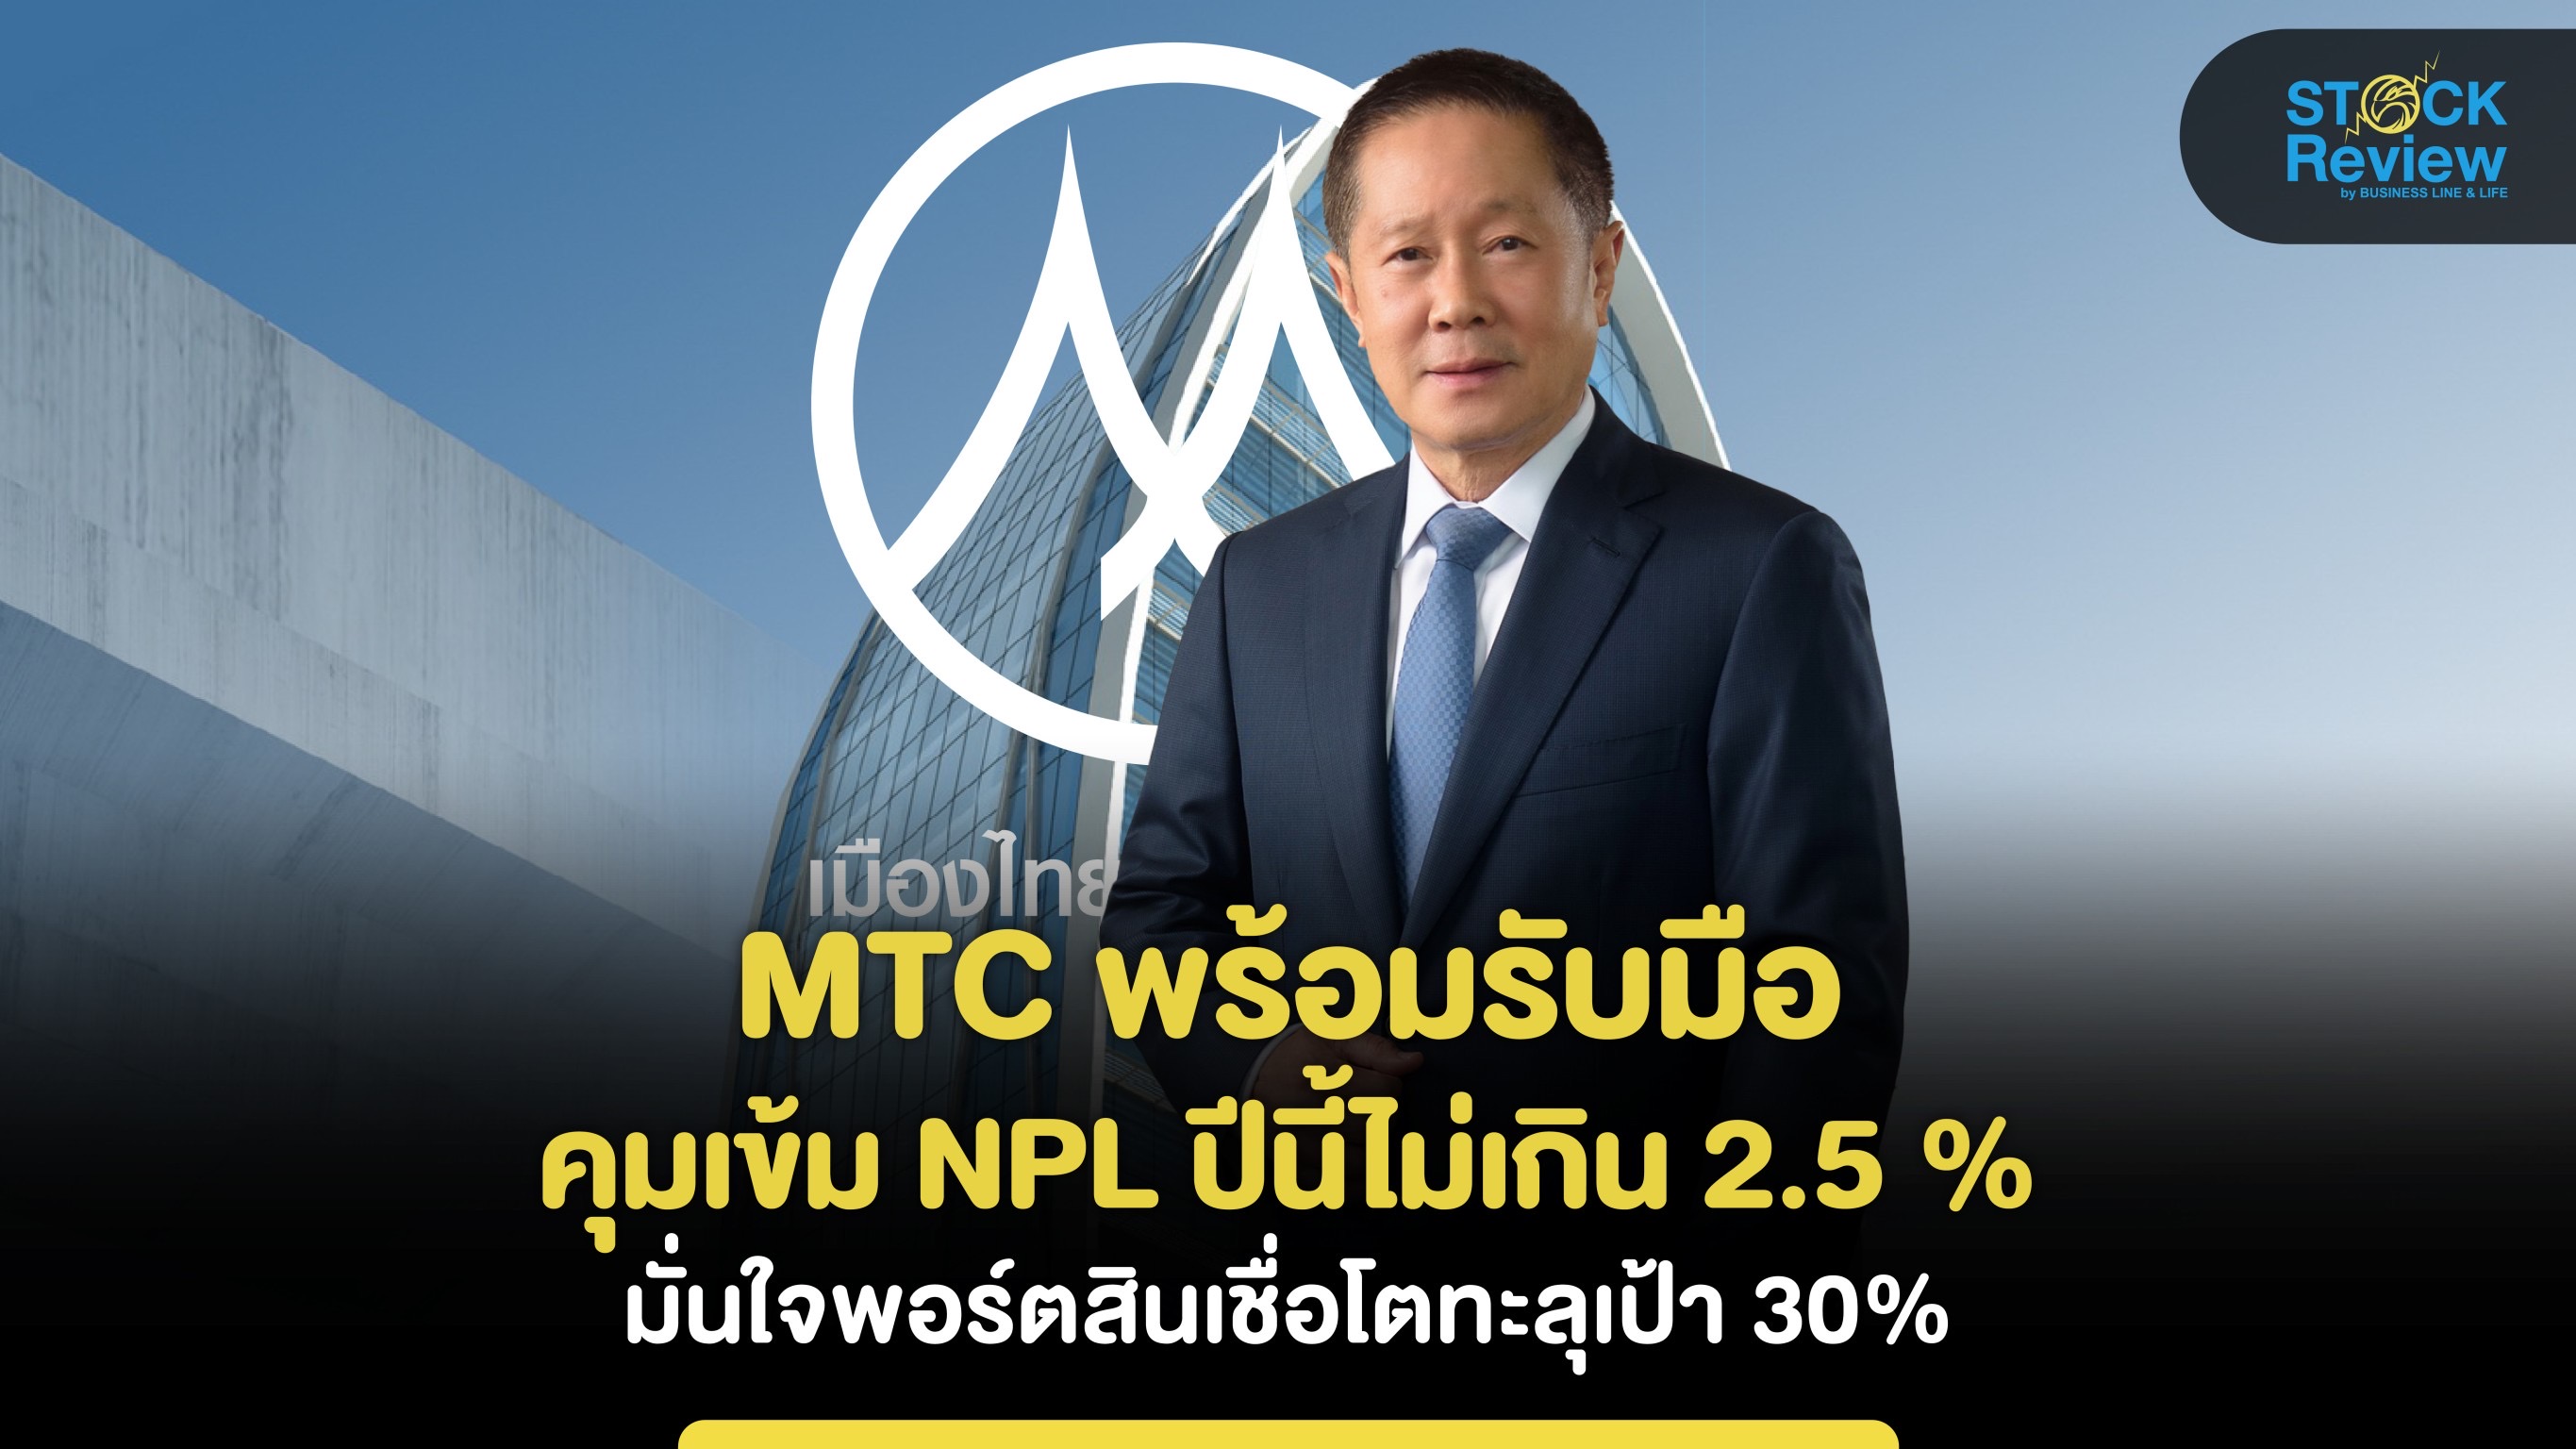 MTC พร้อมรับมือ คุมเข้ม NPL ปีนี้ไม่เกิน 2.5 % มั่นใจพอร์ตสินเชื่อโตทะลุเป้า 30%